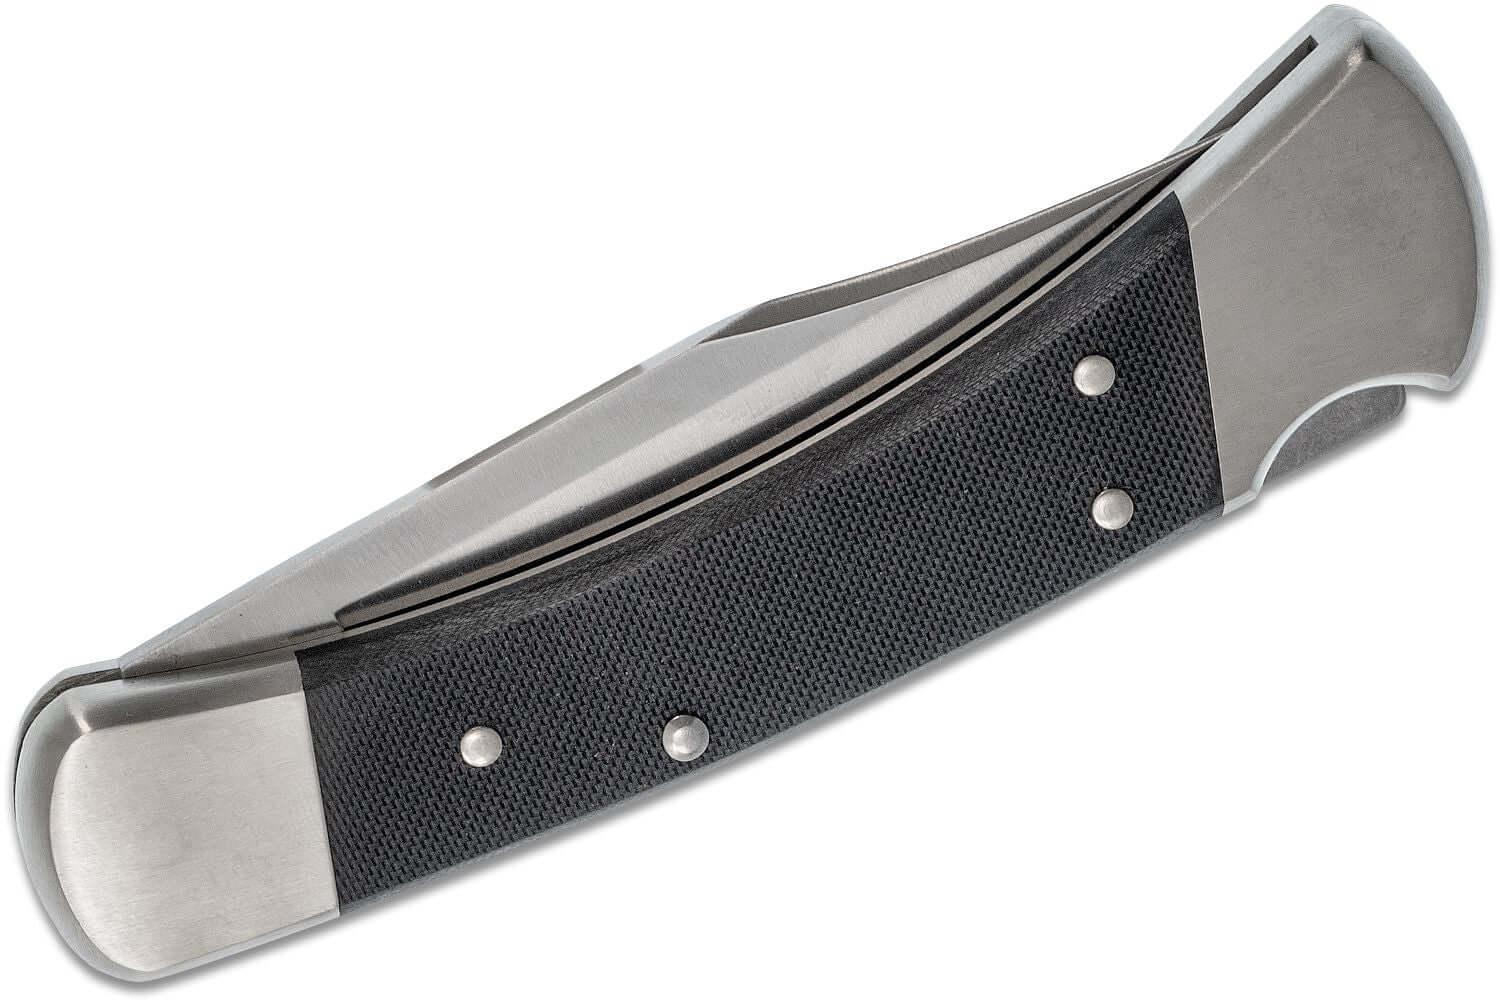 Buck 110 Hunter Pro Lockback Black G10 w Nickel Silver Bolsters Satin Clip Point CPM S30V - Knives.mx